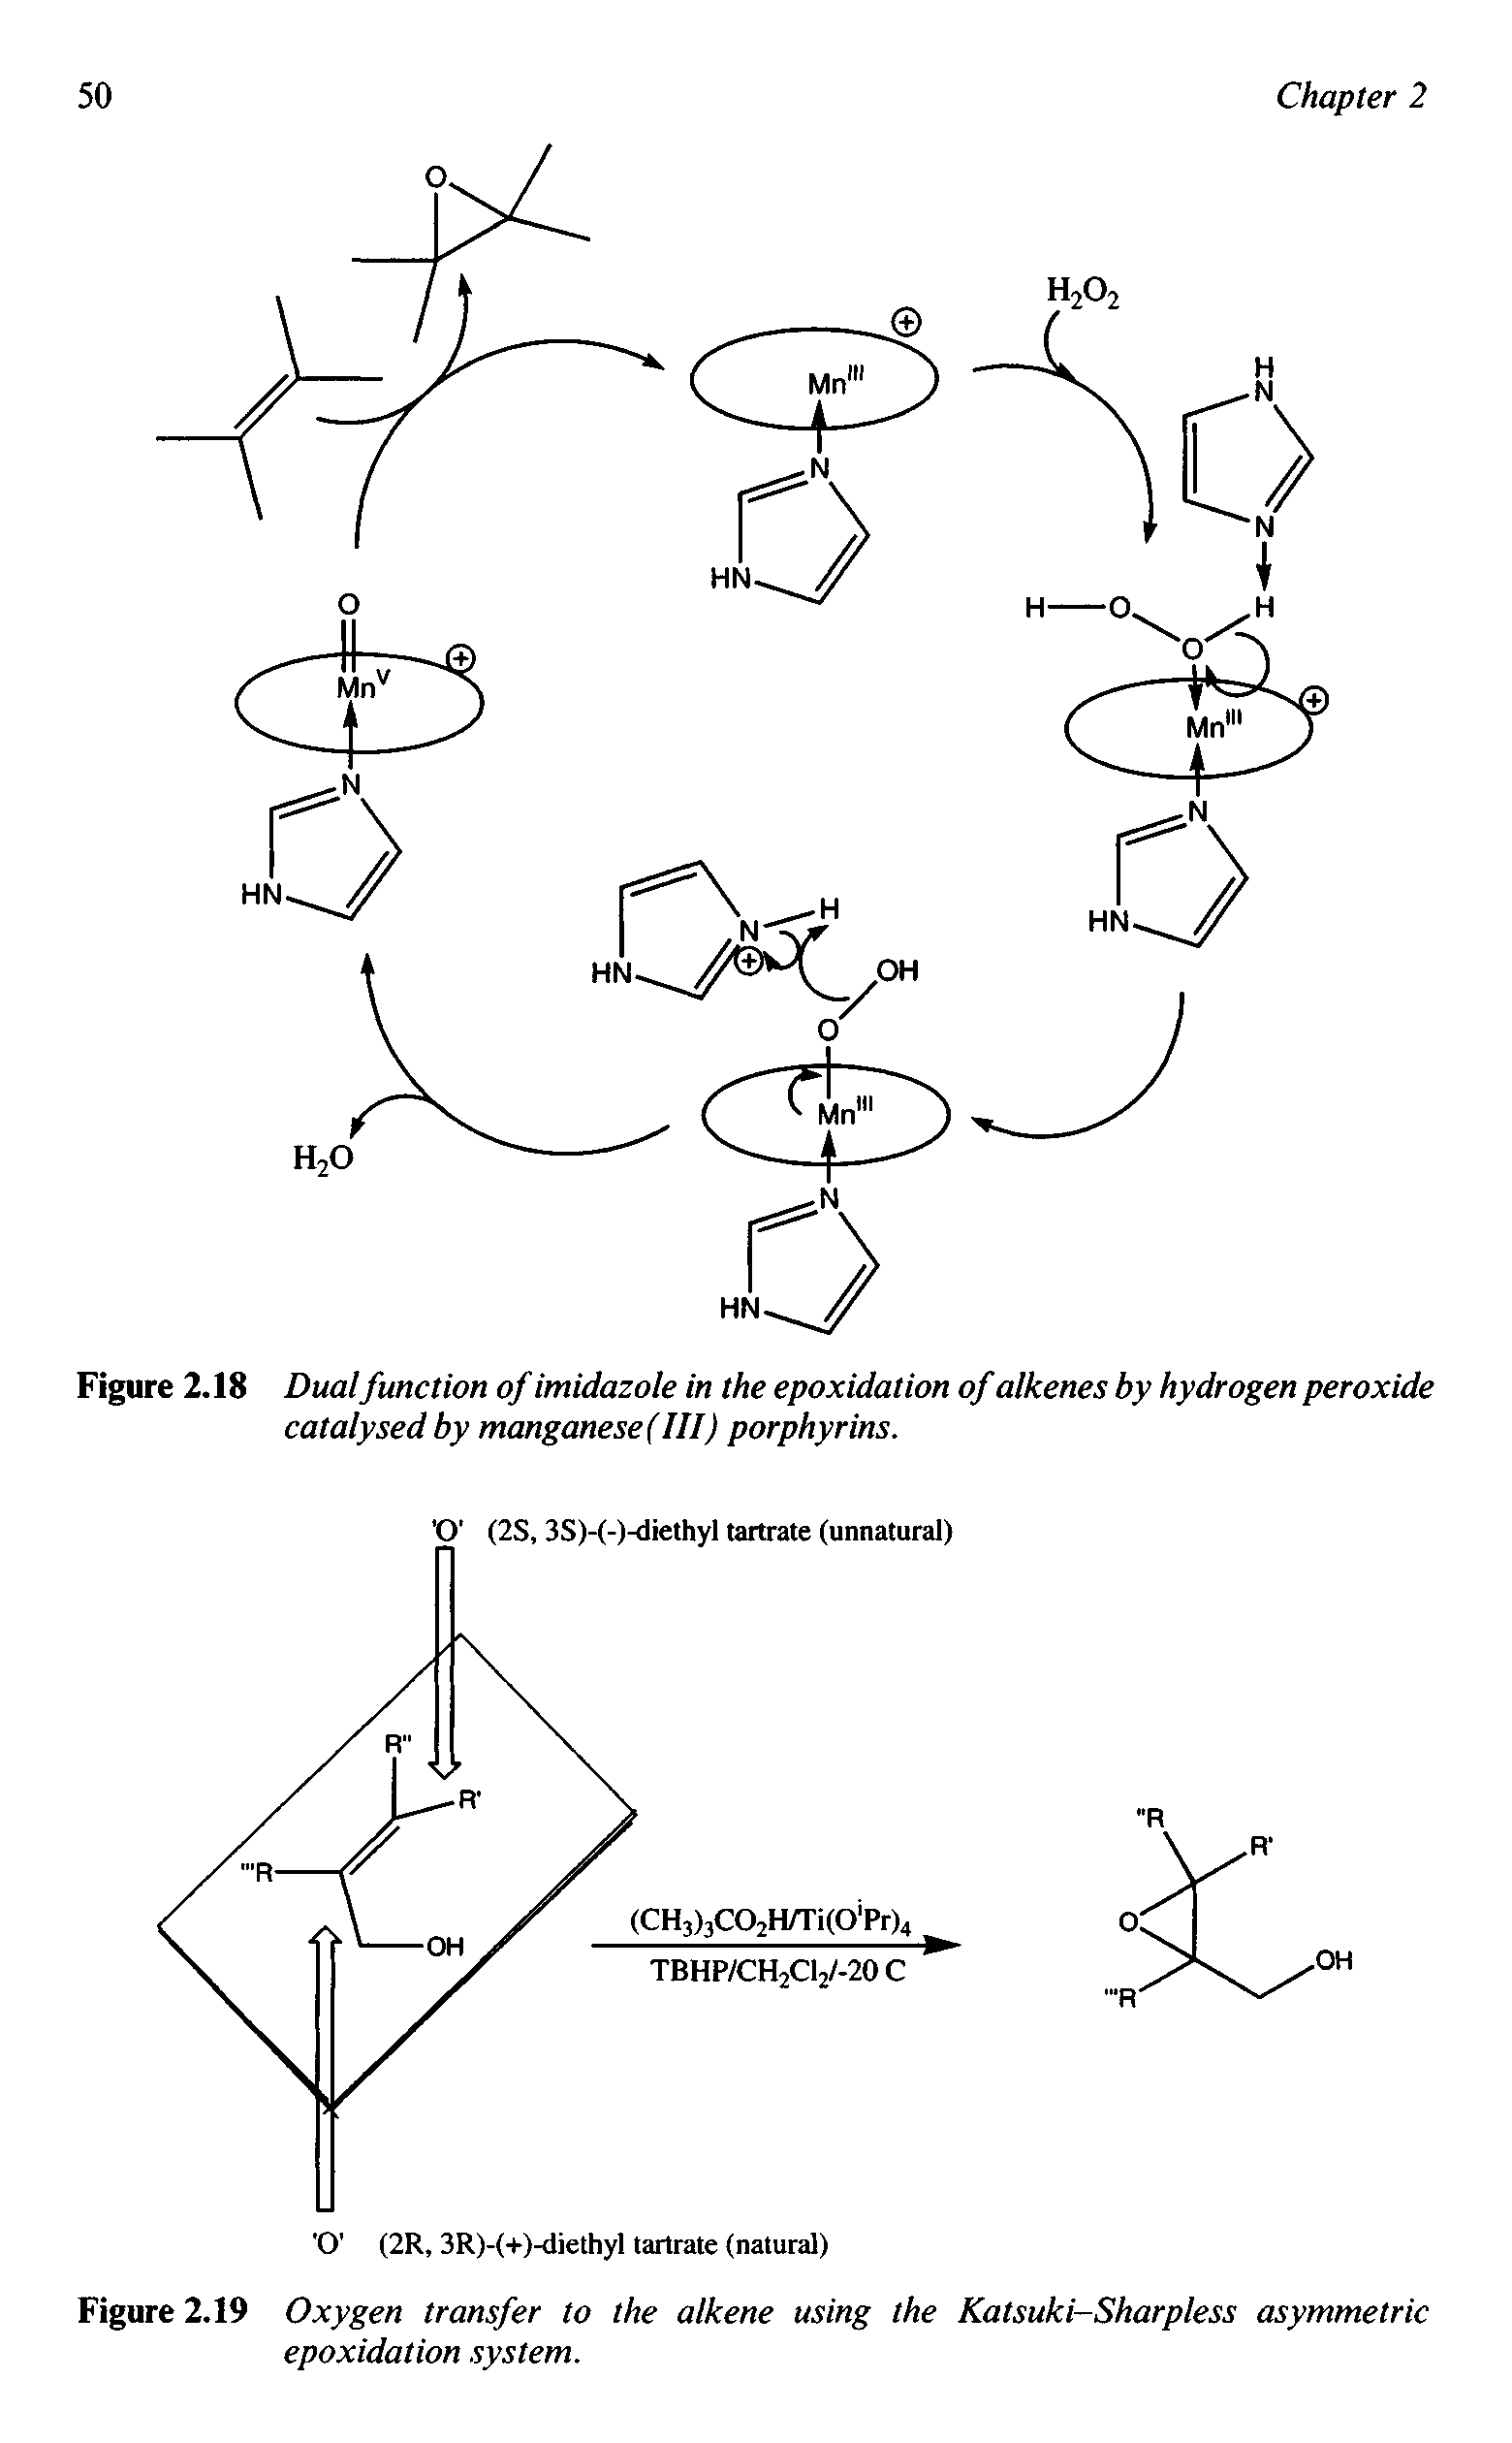 Figure 2.19 Oxygen transfer to the alkene using the Kalsuki-Sharpless asymmetric epoxidation system.